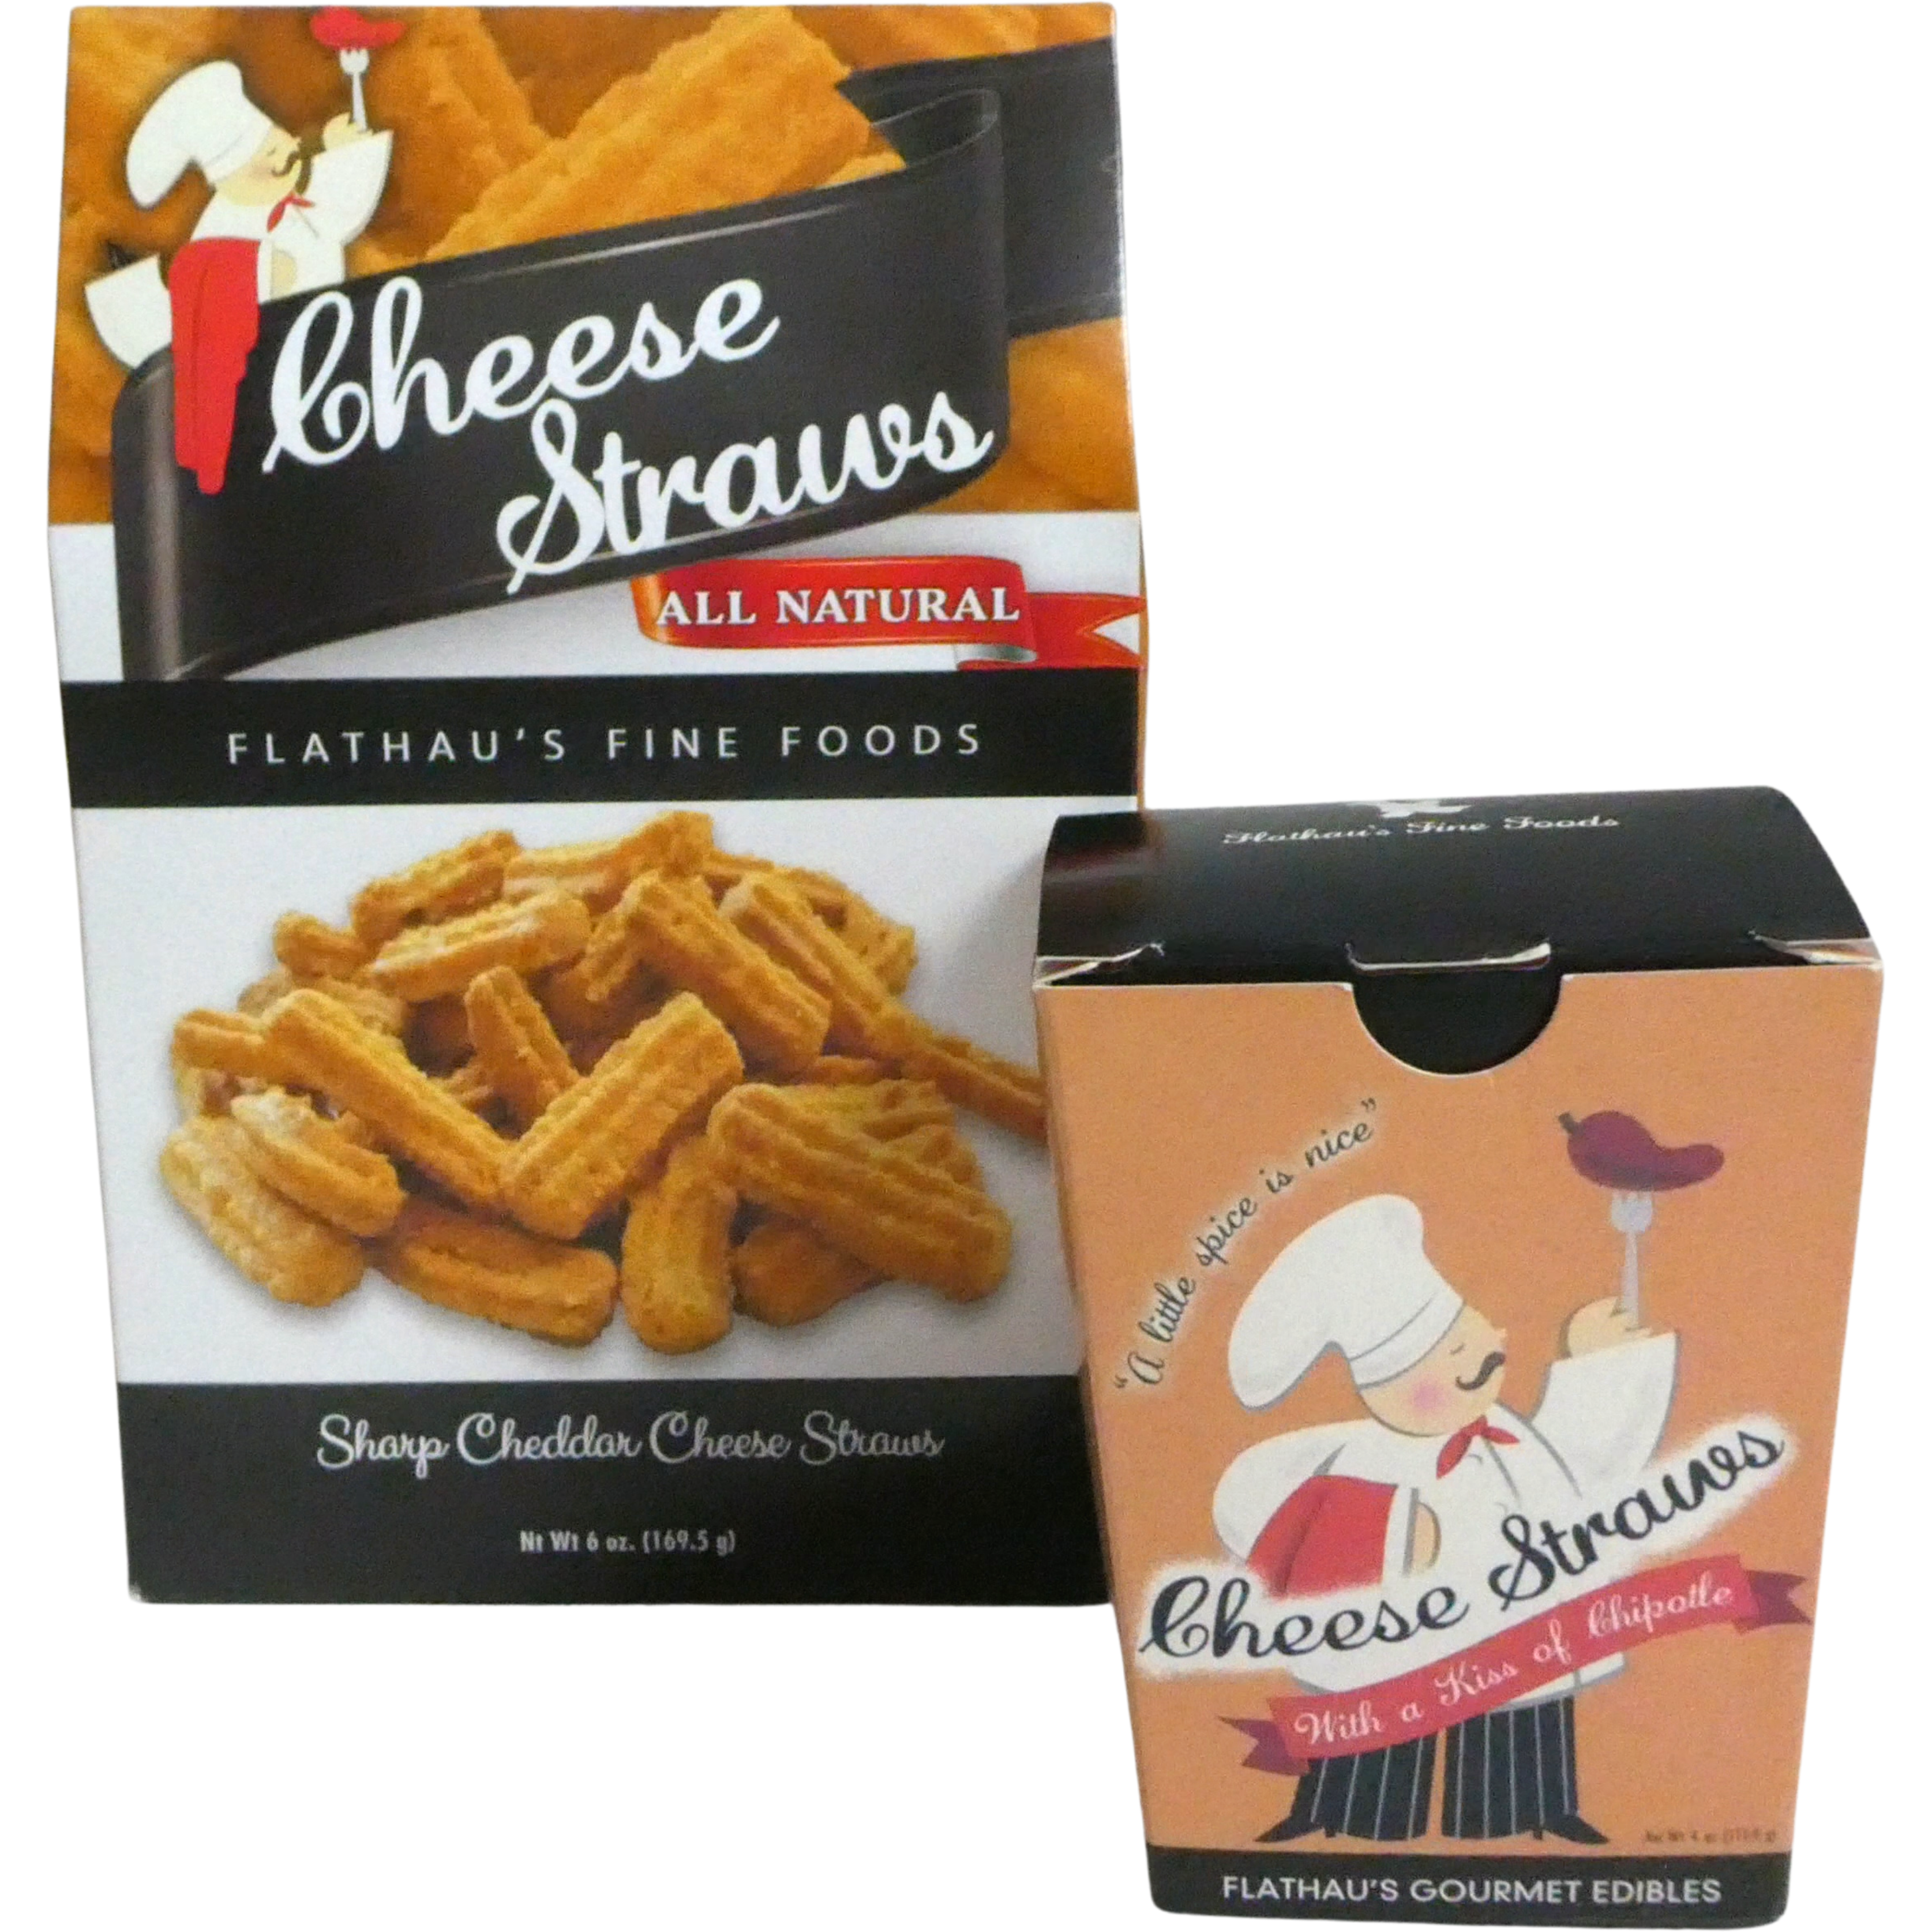 Boxed Cheese Straws - 4 or 6 oz